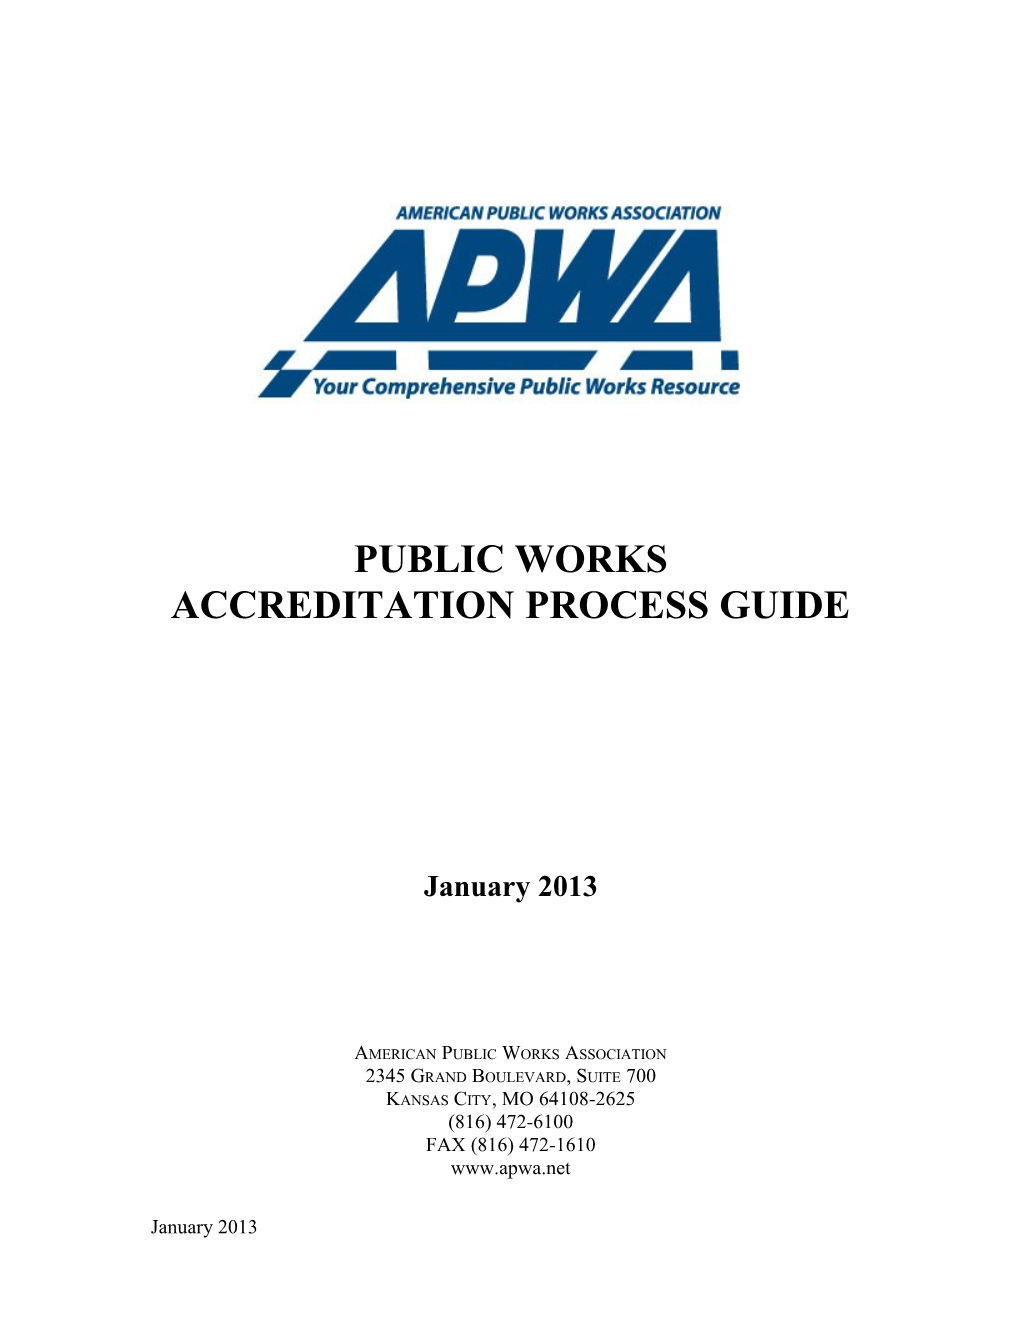 Accreditation Process Guide